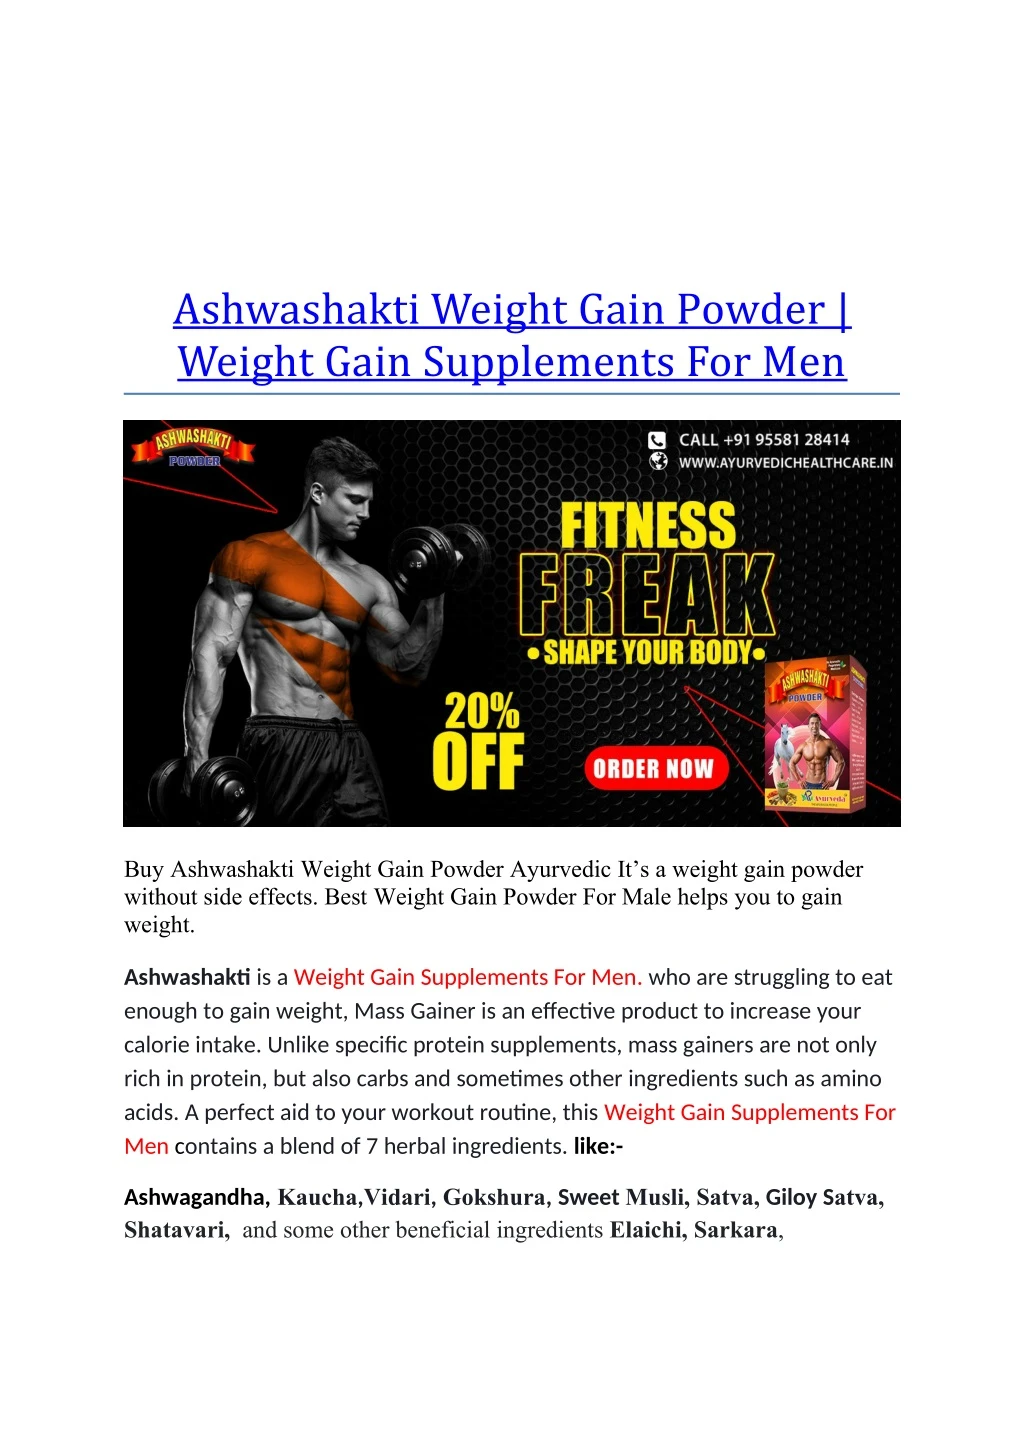 ashwashakti weight gain powder weight gain